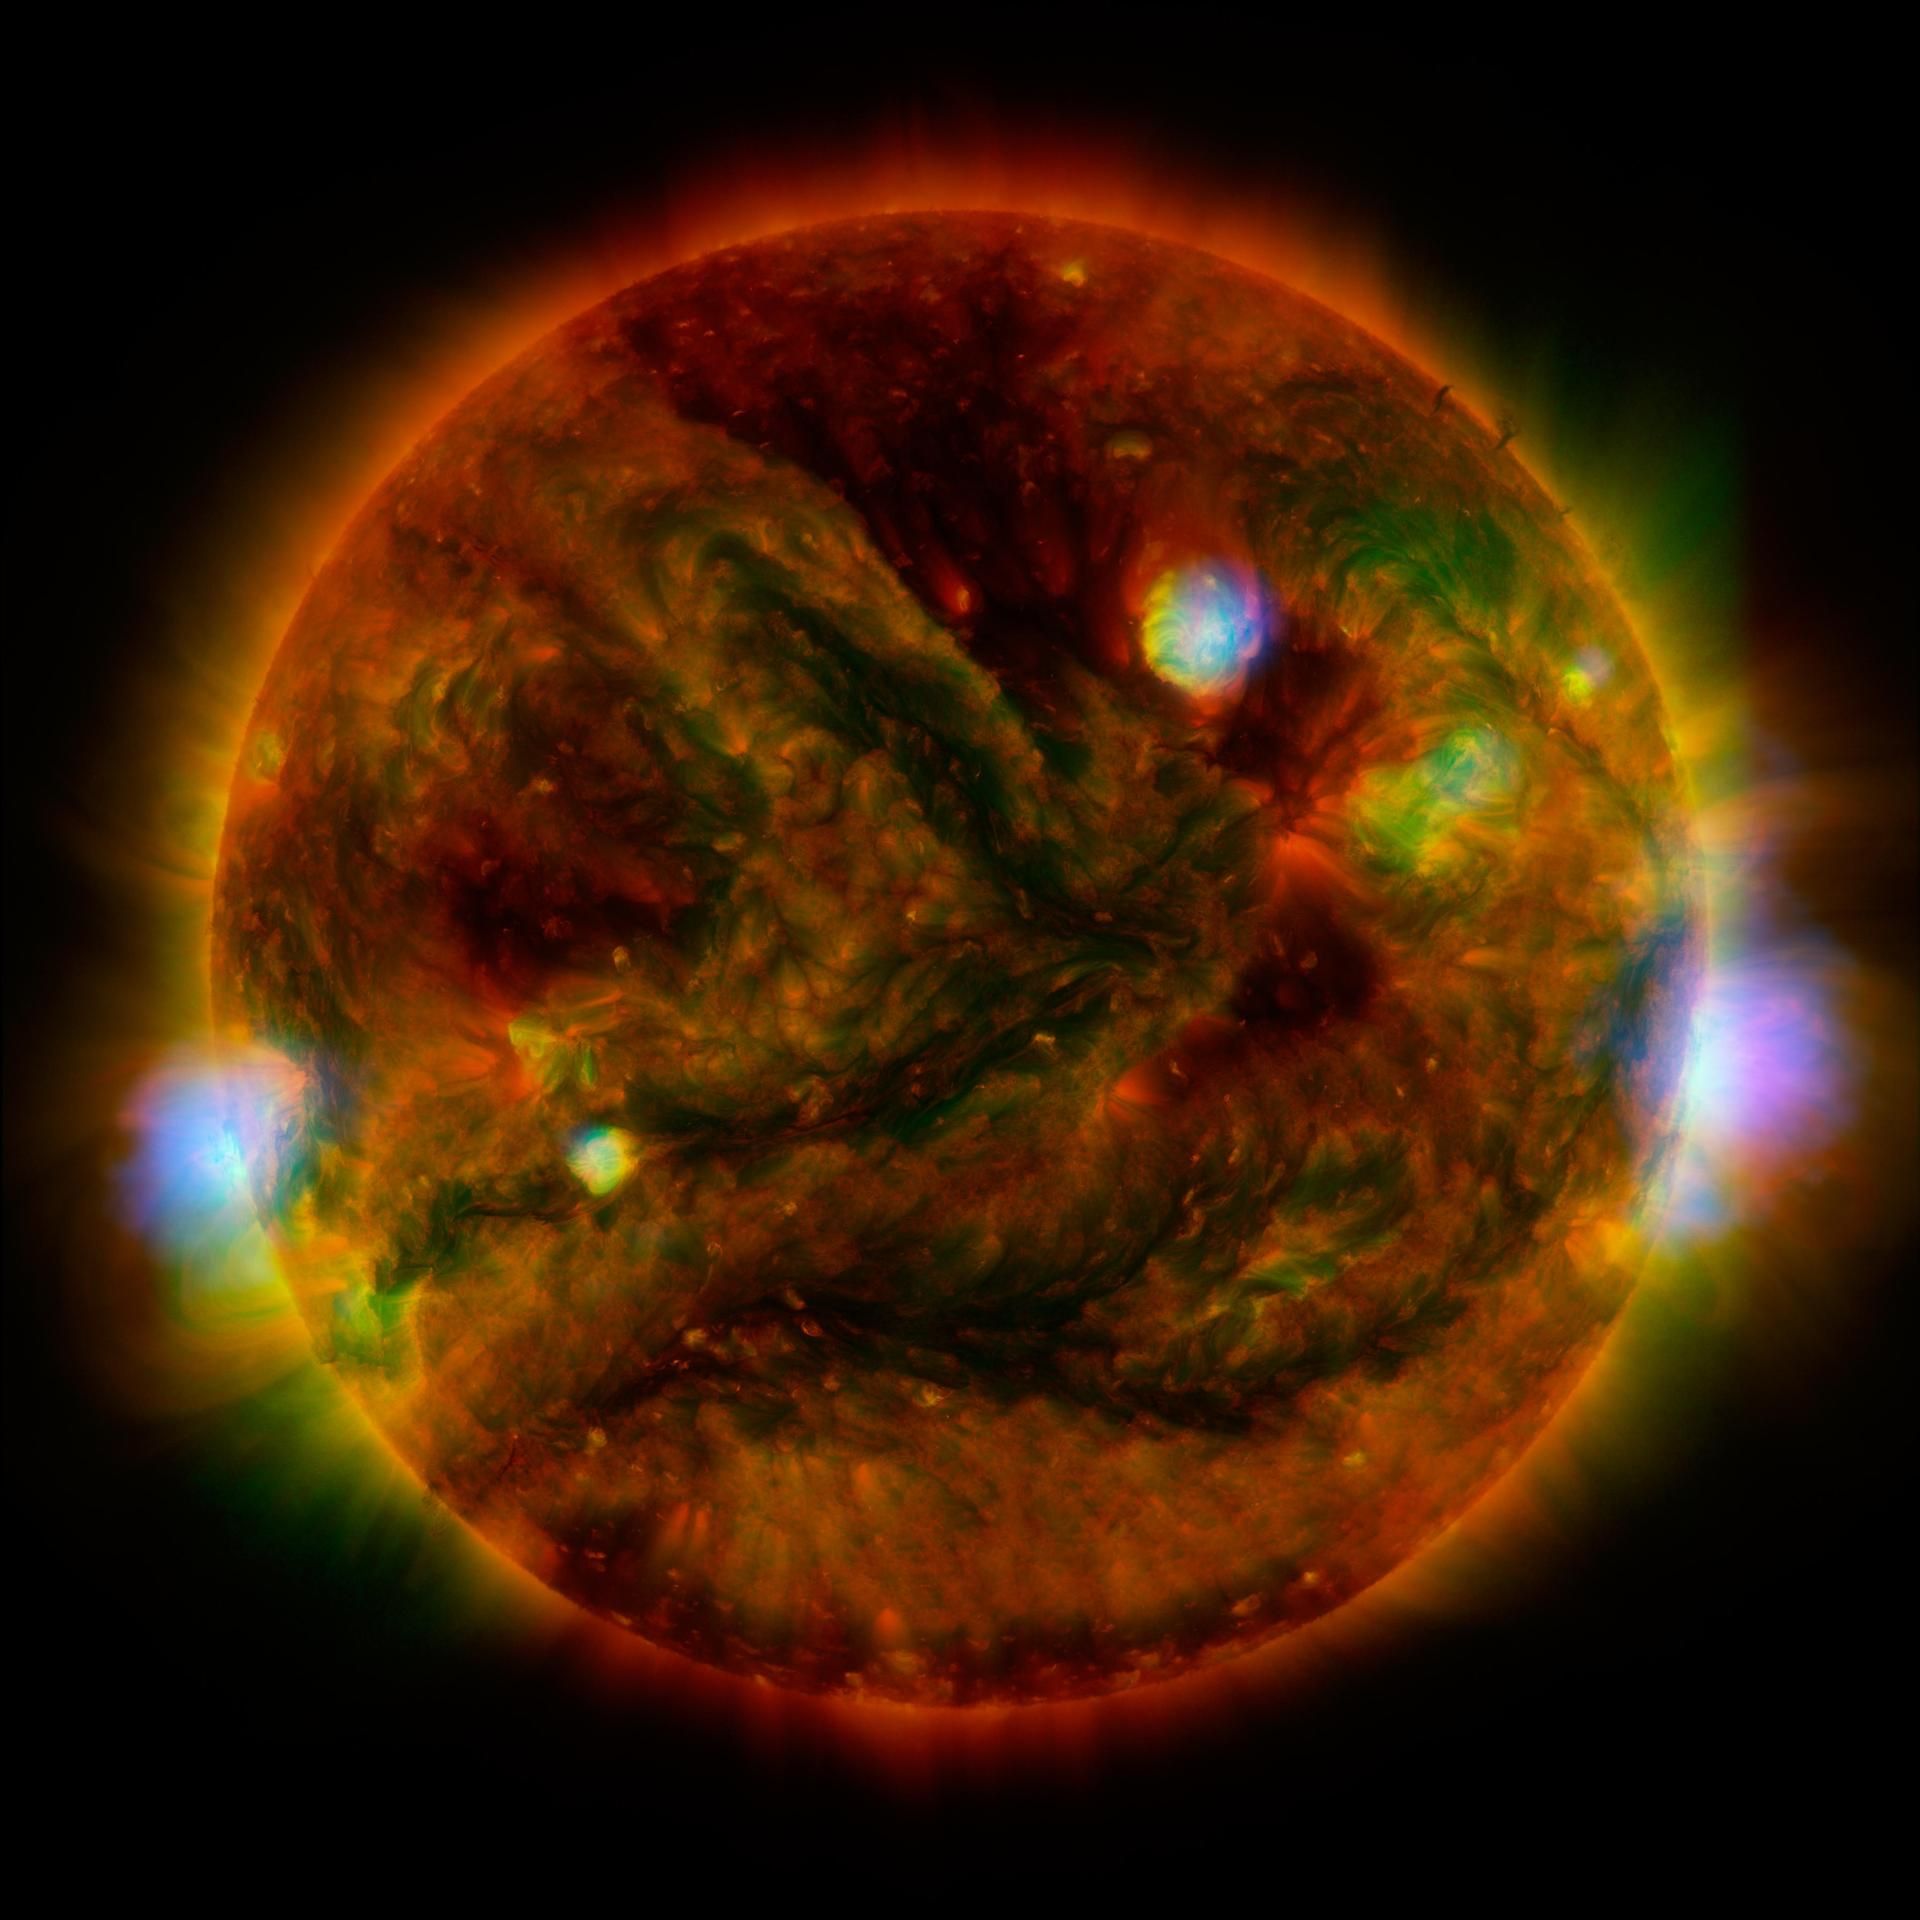 7 CloseUp NASA Photos Of The Sun's Surface Showing Its Complexities